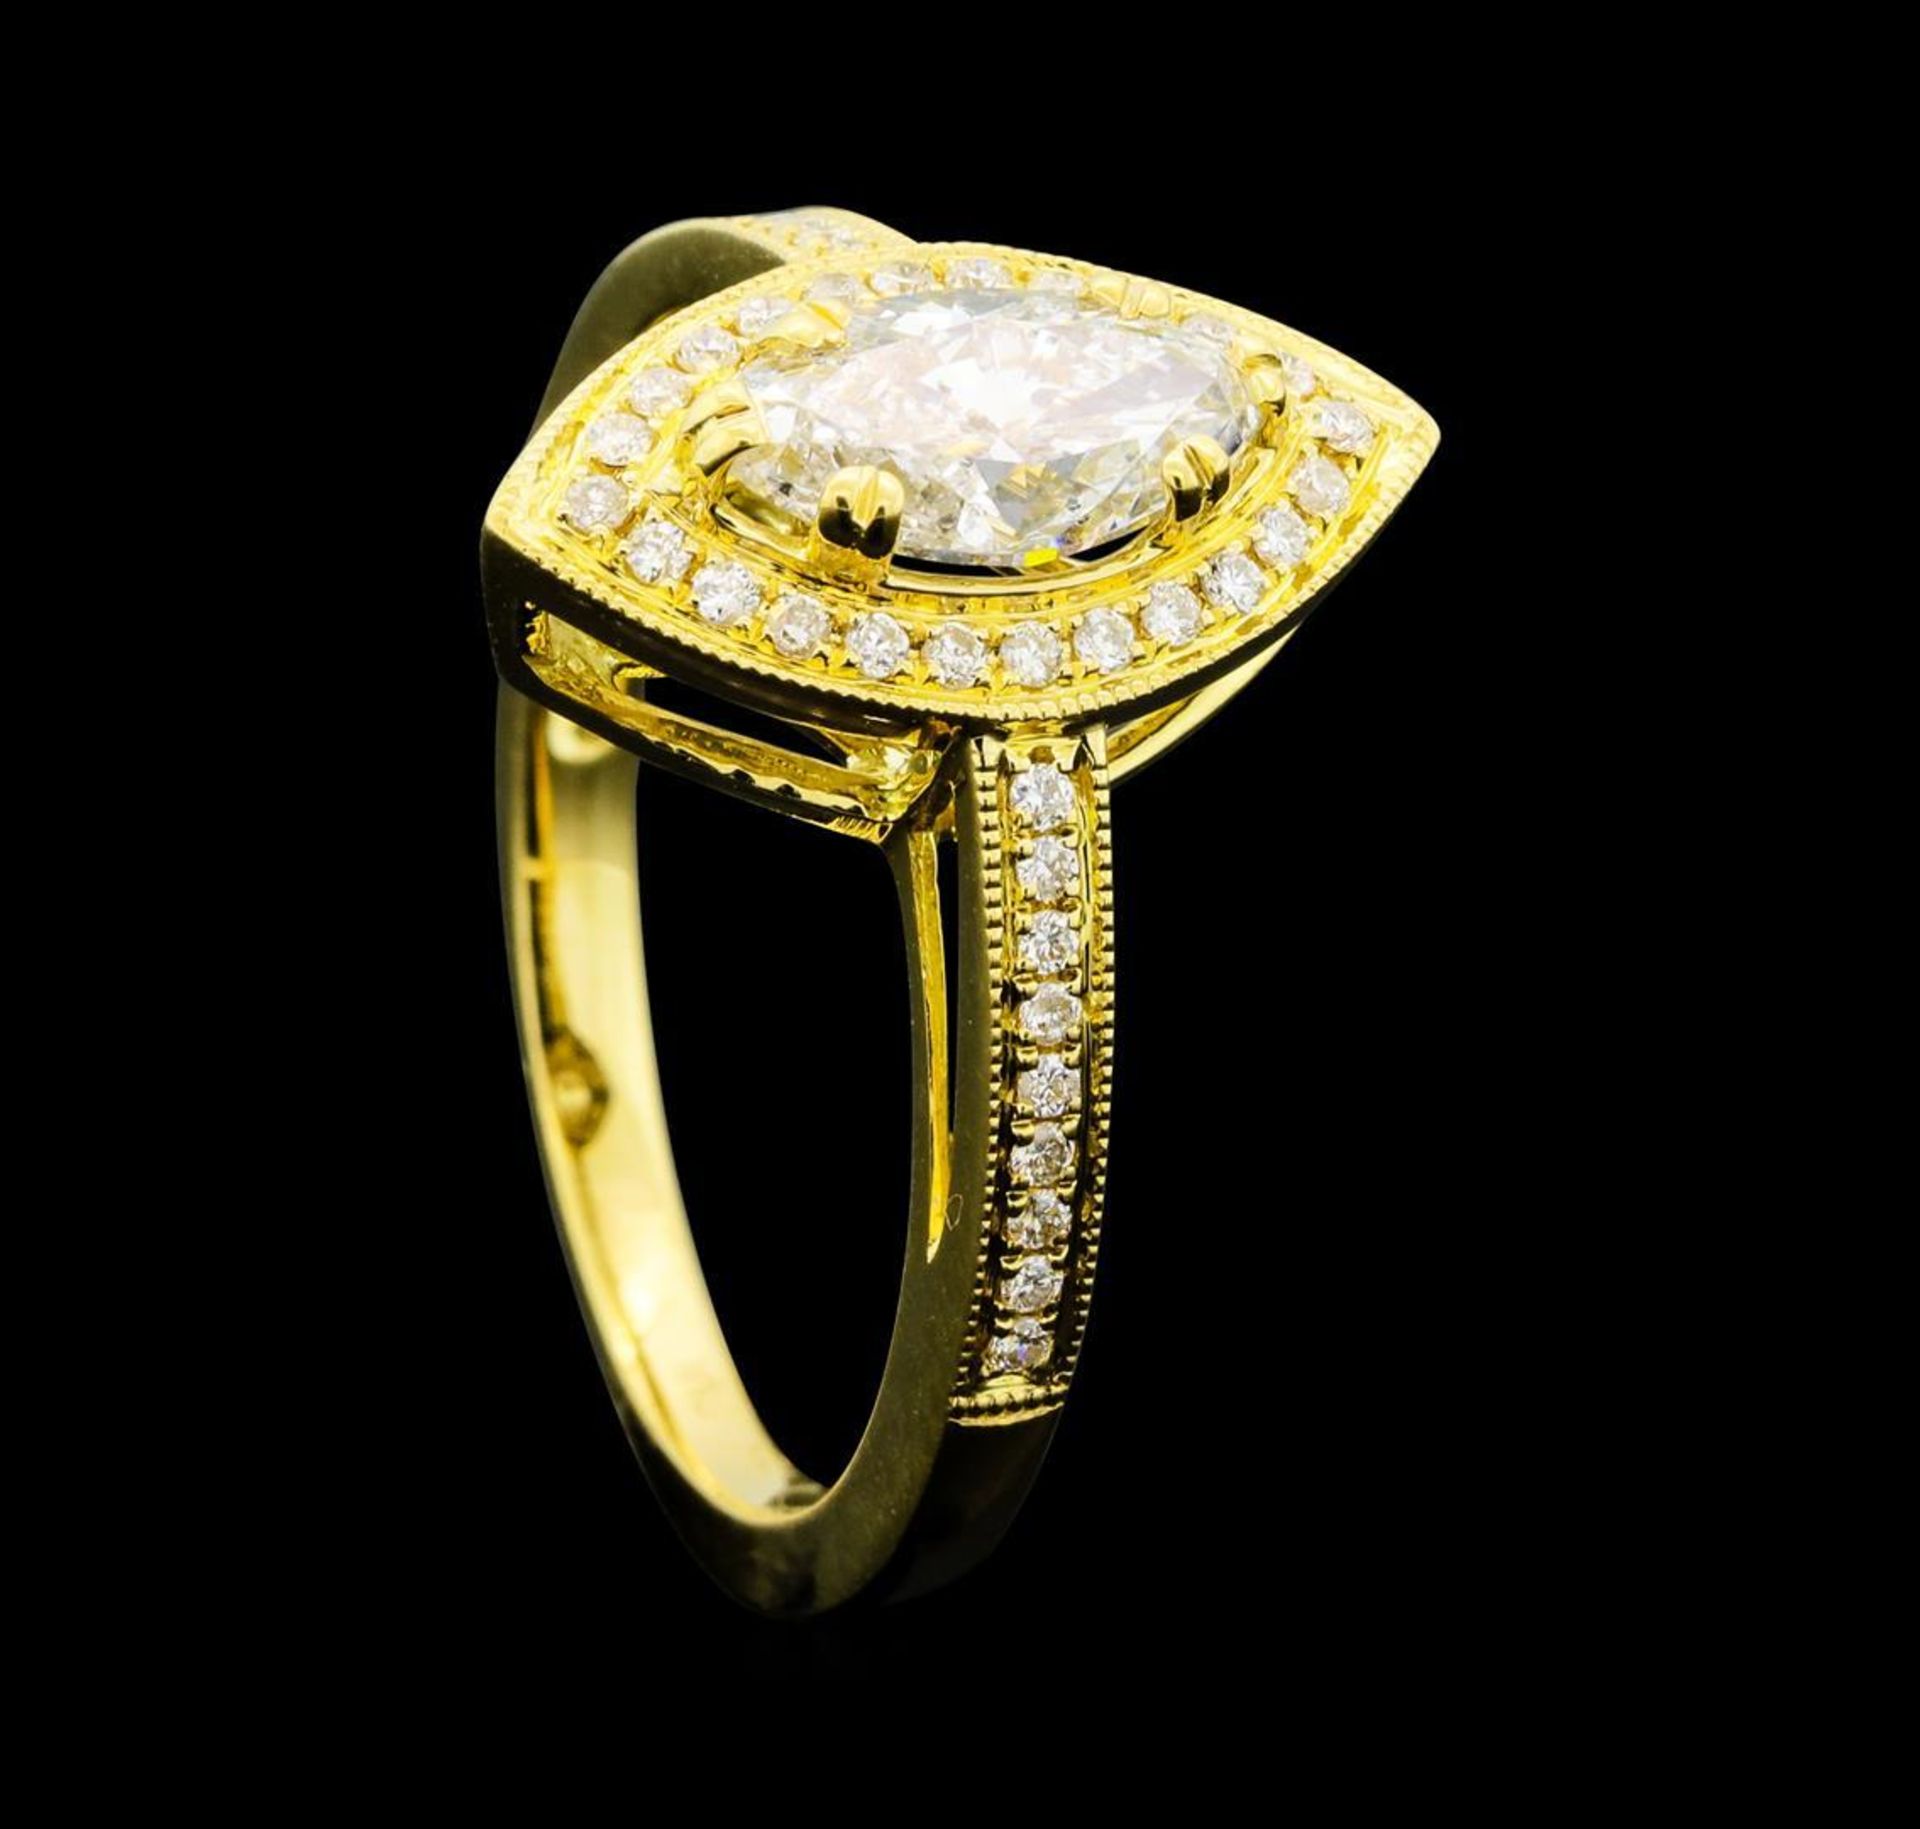 1.20 ctw Diamond Ring - 18KT Yellow Gold - Image 4 of 5